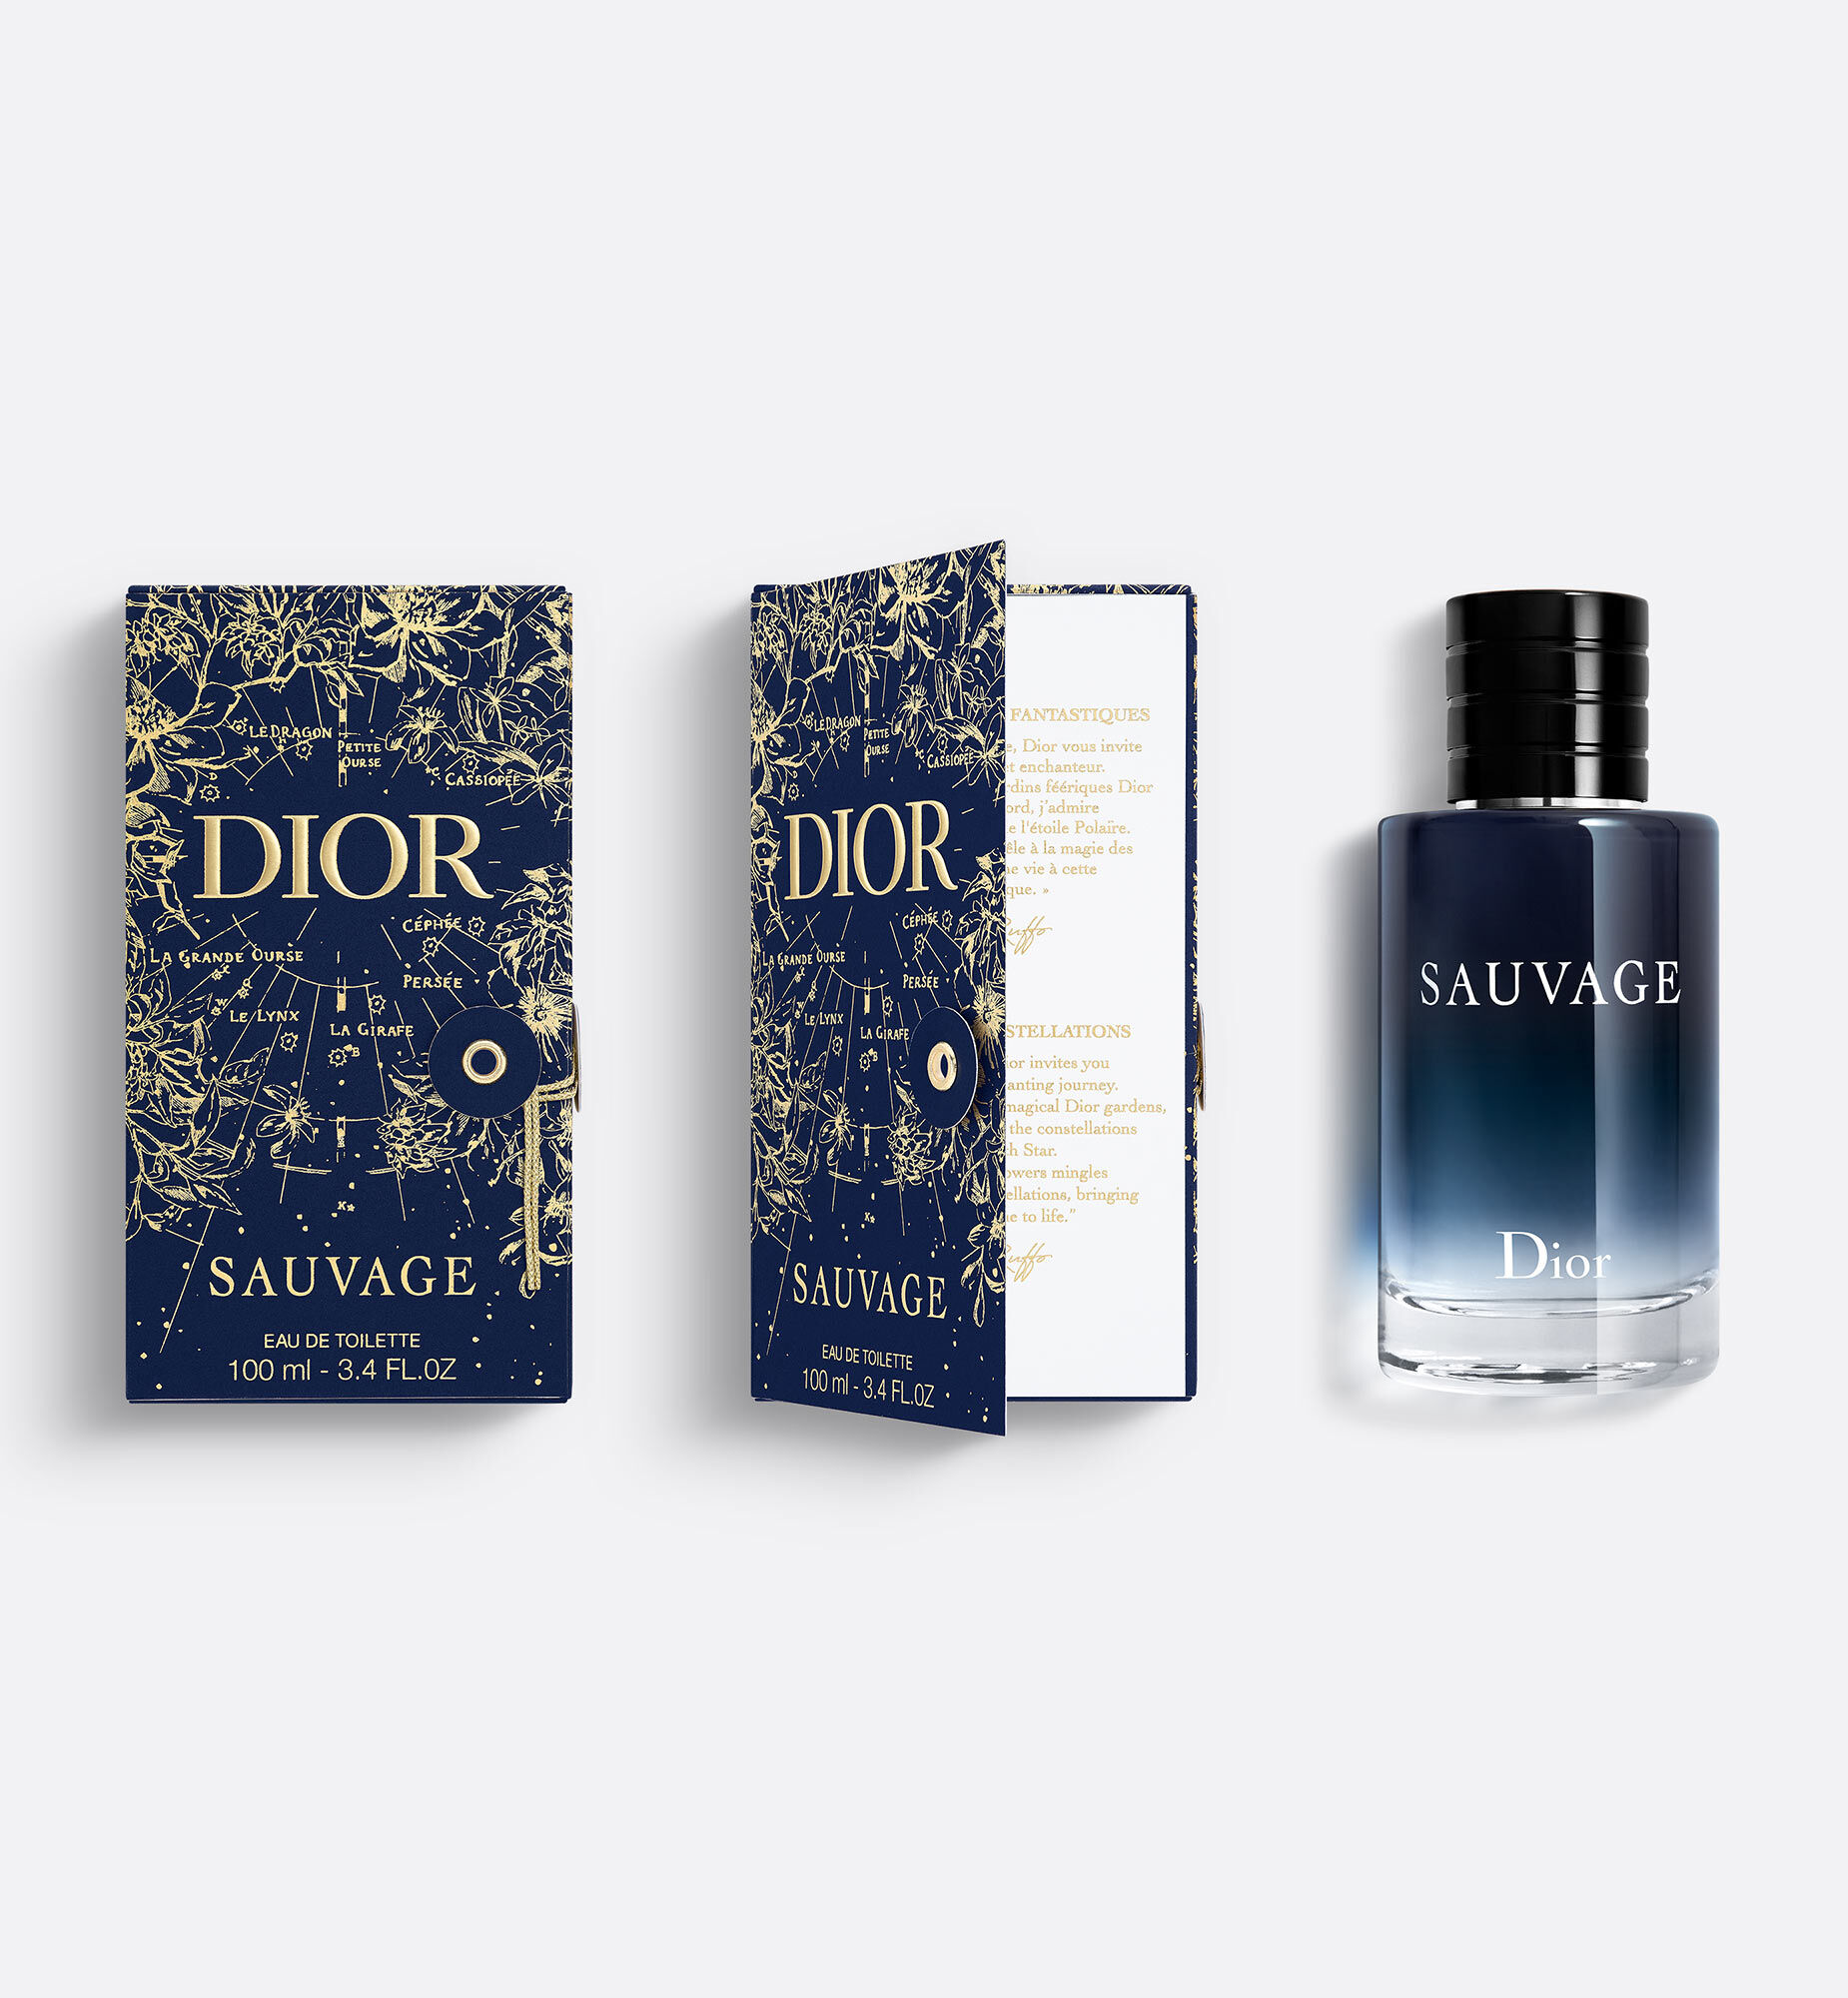 Dior SAUVAGE 〔オードゥトワレ〕 - alluredental.com